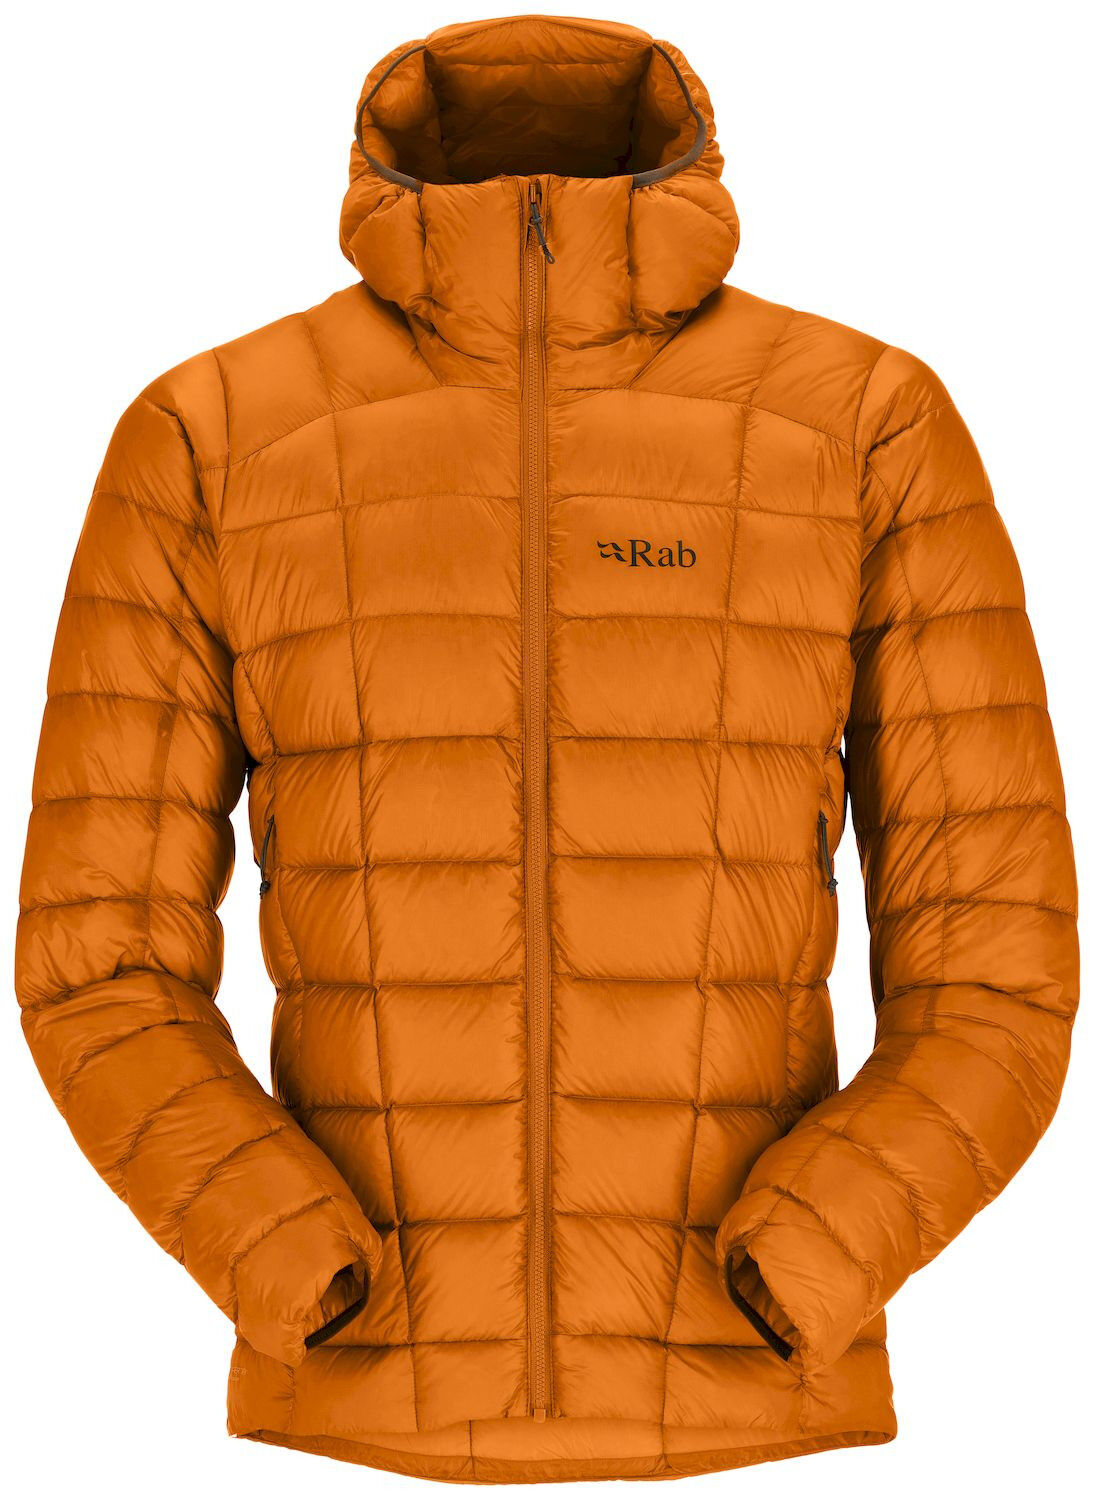 Rab Mythic Alpine Jacket - Giacca in piumino - Uomo